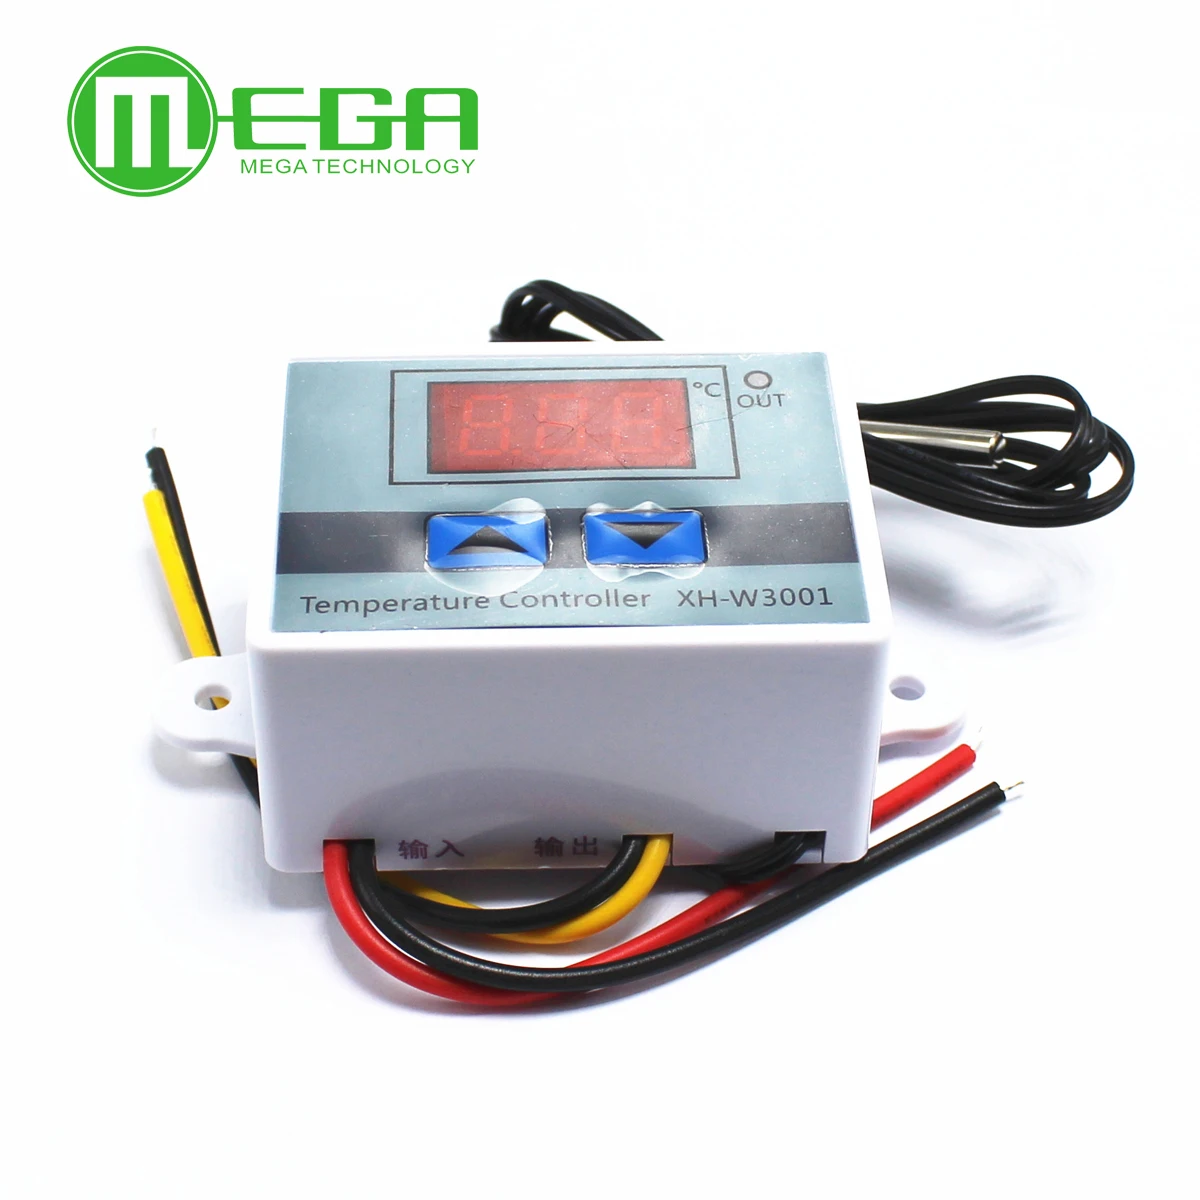 IS-W3001 digitalni termostat temperature stikalo mikroračunalniška temperaturni regulator za nadzor temperature stikalo za temperaturo